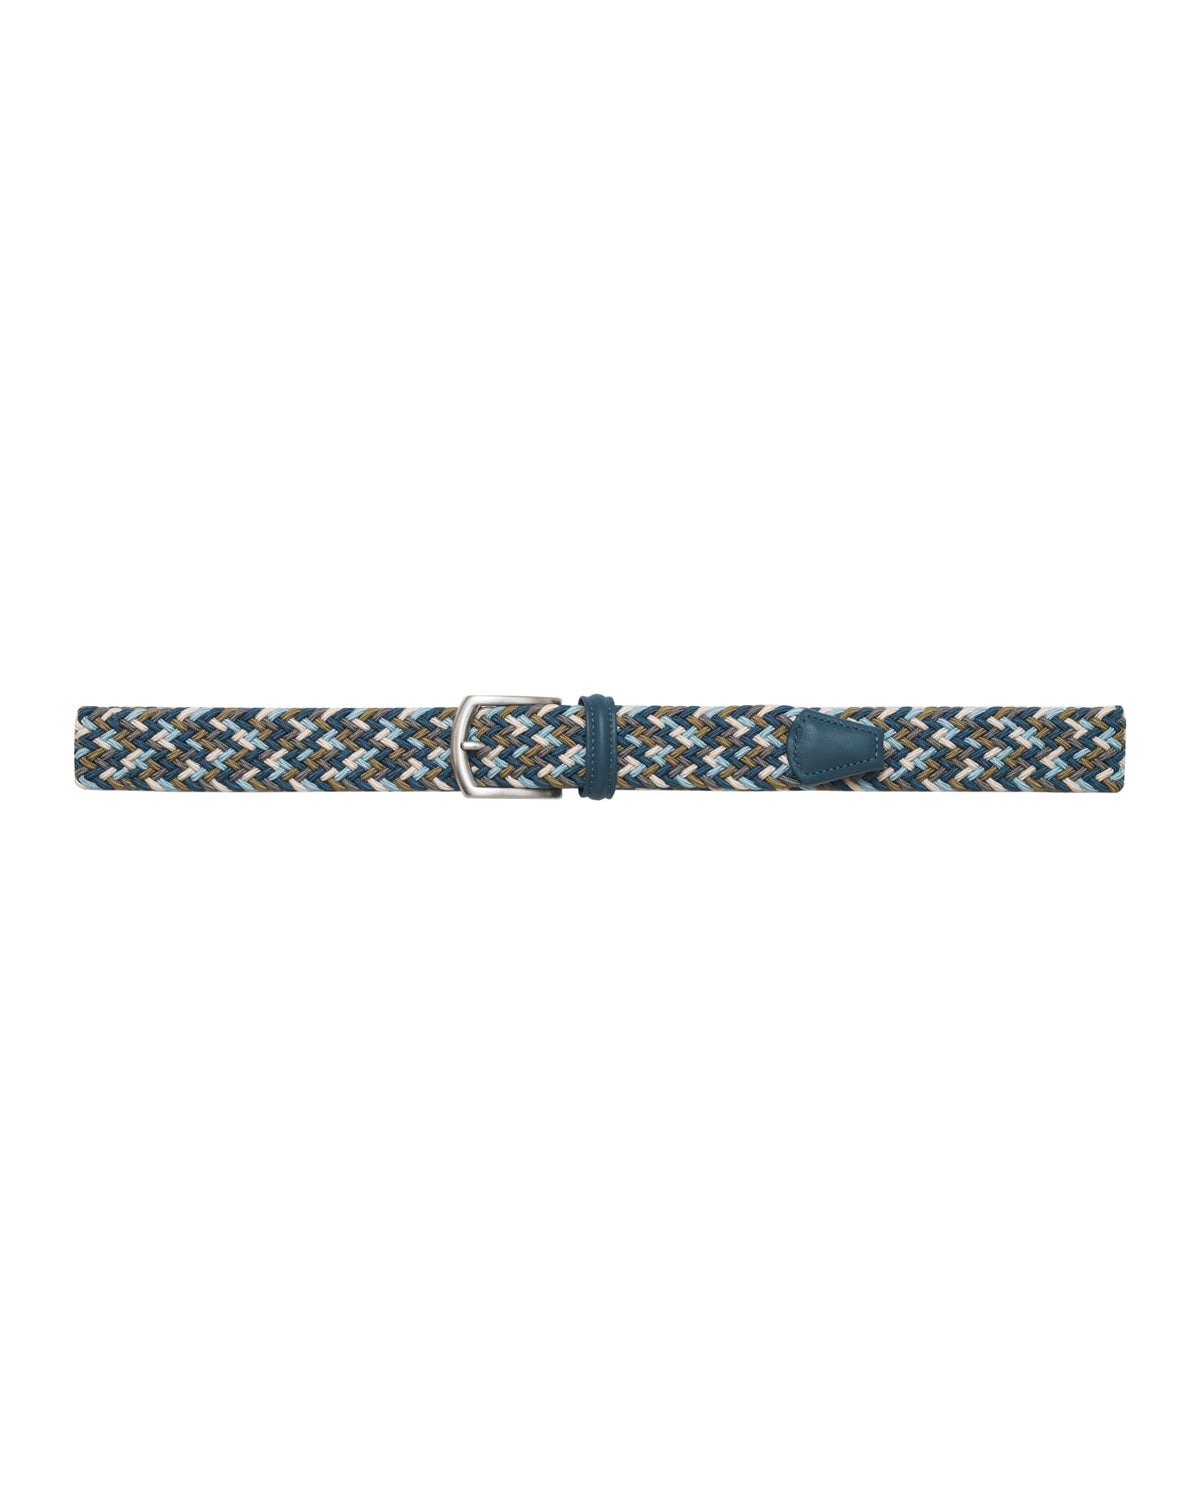 Multi Color Stretch Woven Belt - Blue Cream Multi